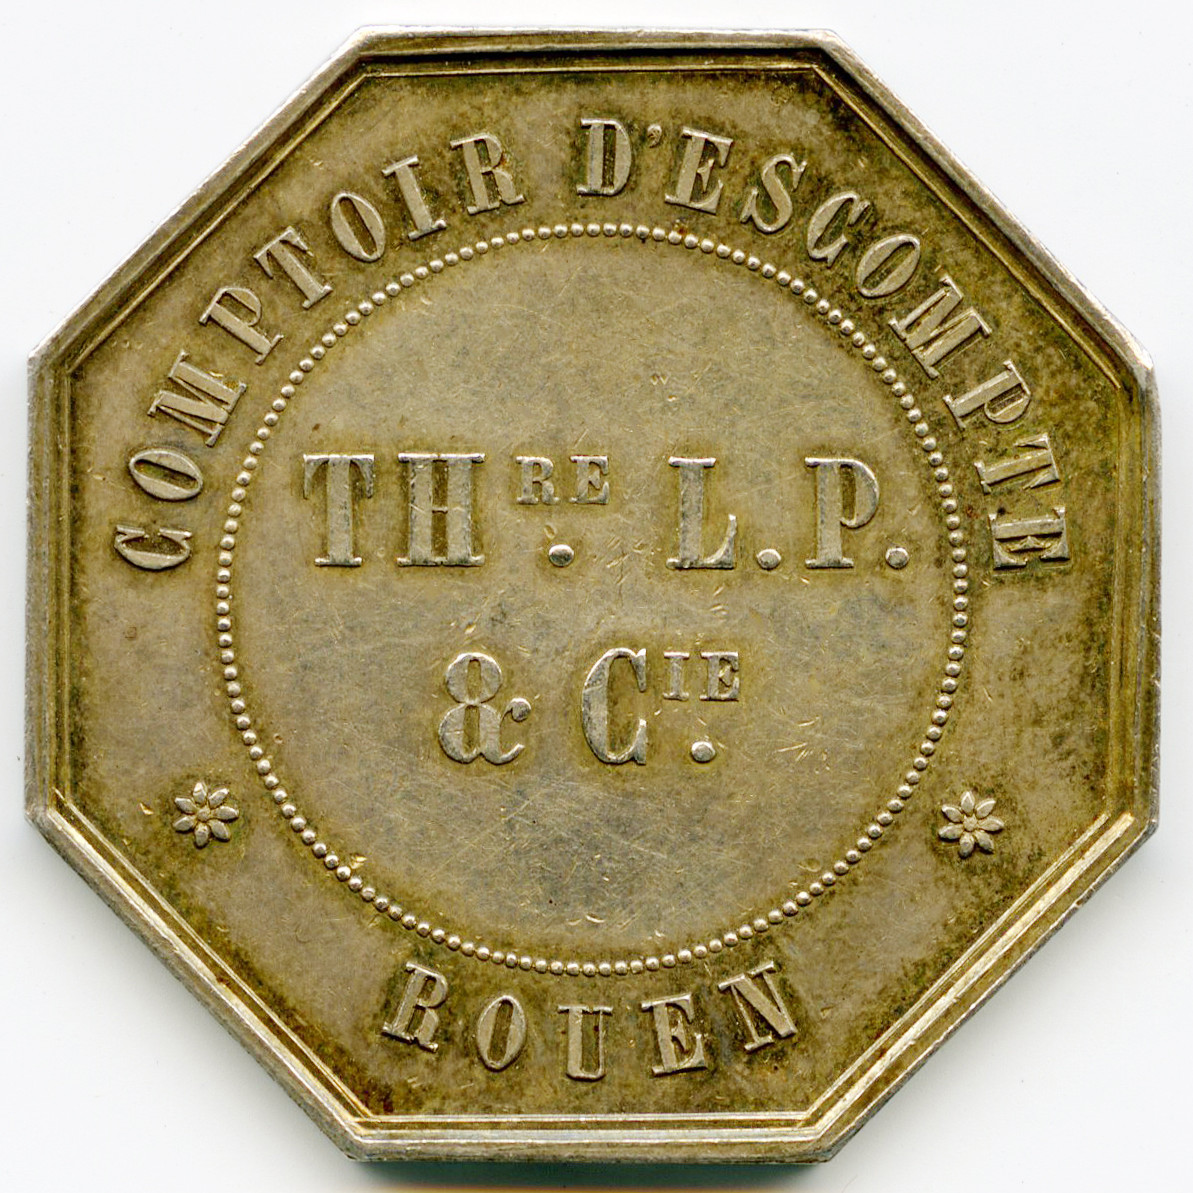 Comptoir d’escompte - Rouen - 1854 revers